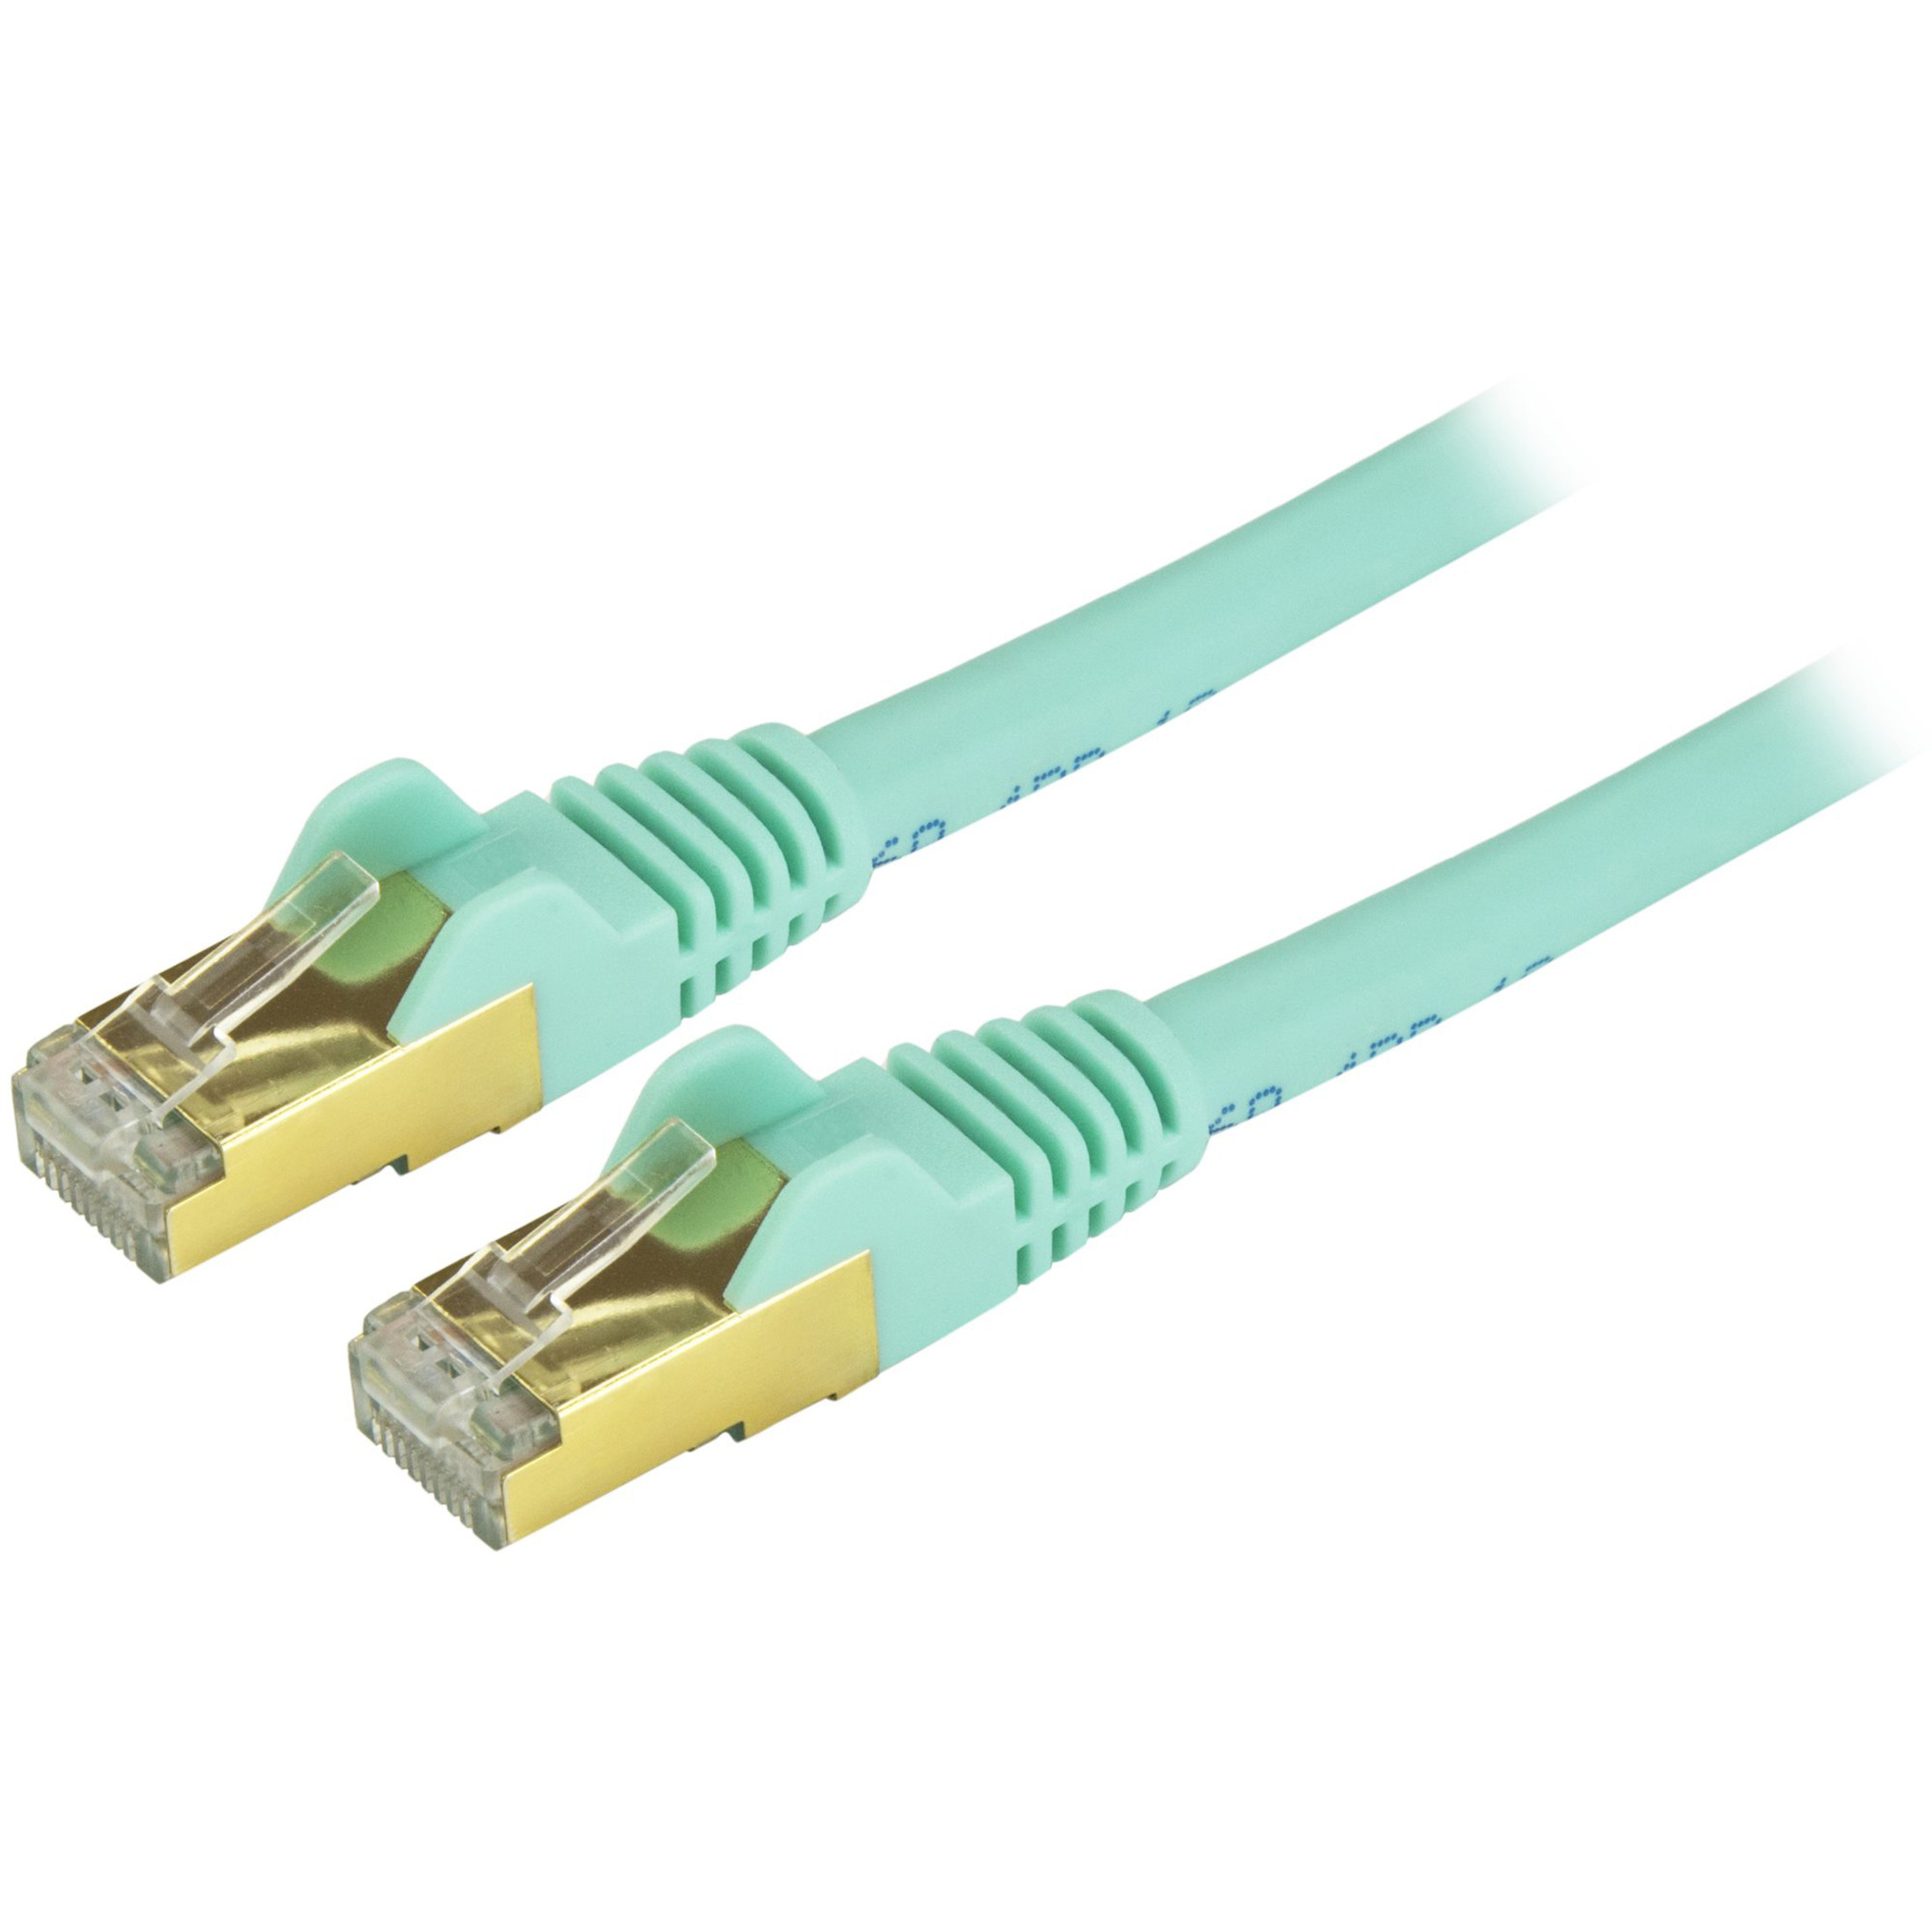 Startech .com 1ft CAT6a Ethernet Cable10 Gigabit Category 6a Shielded Snagless 100W PoE Patch Cord10GbE Aqua UL Certified Wiring/TIAC… C6ASPAT1AQ